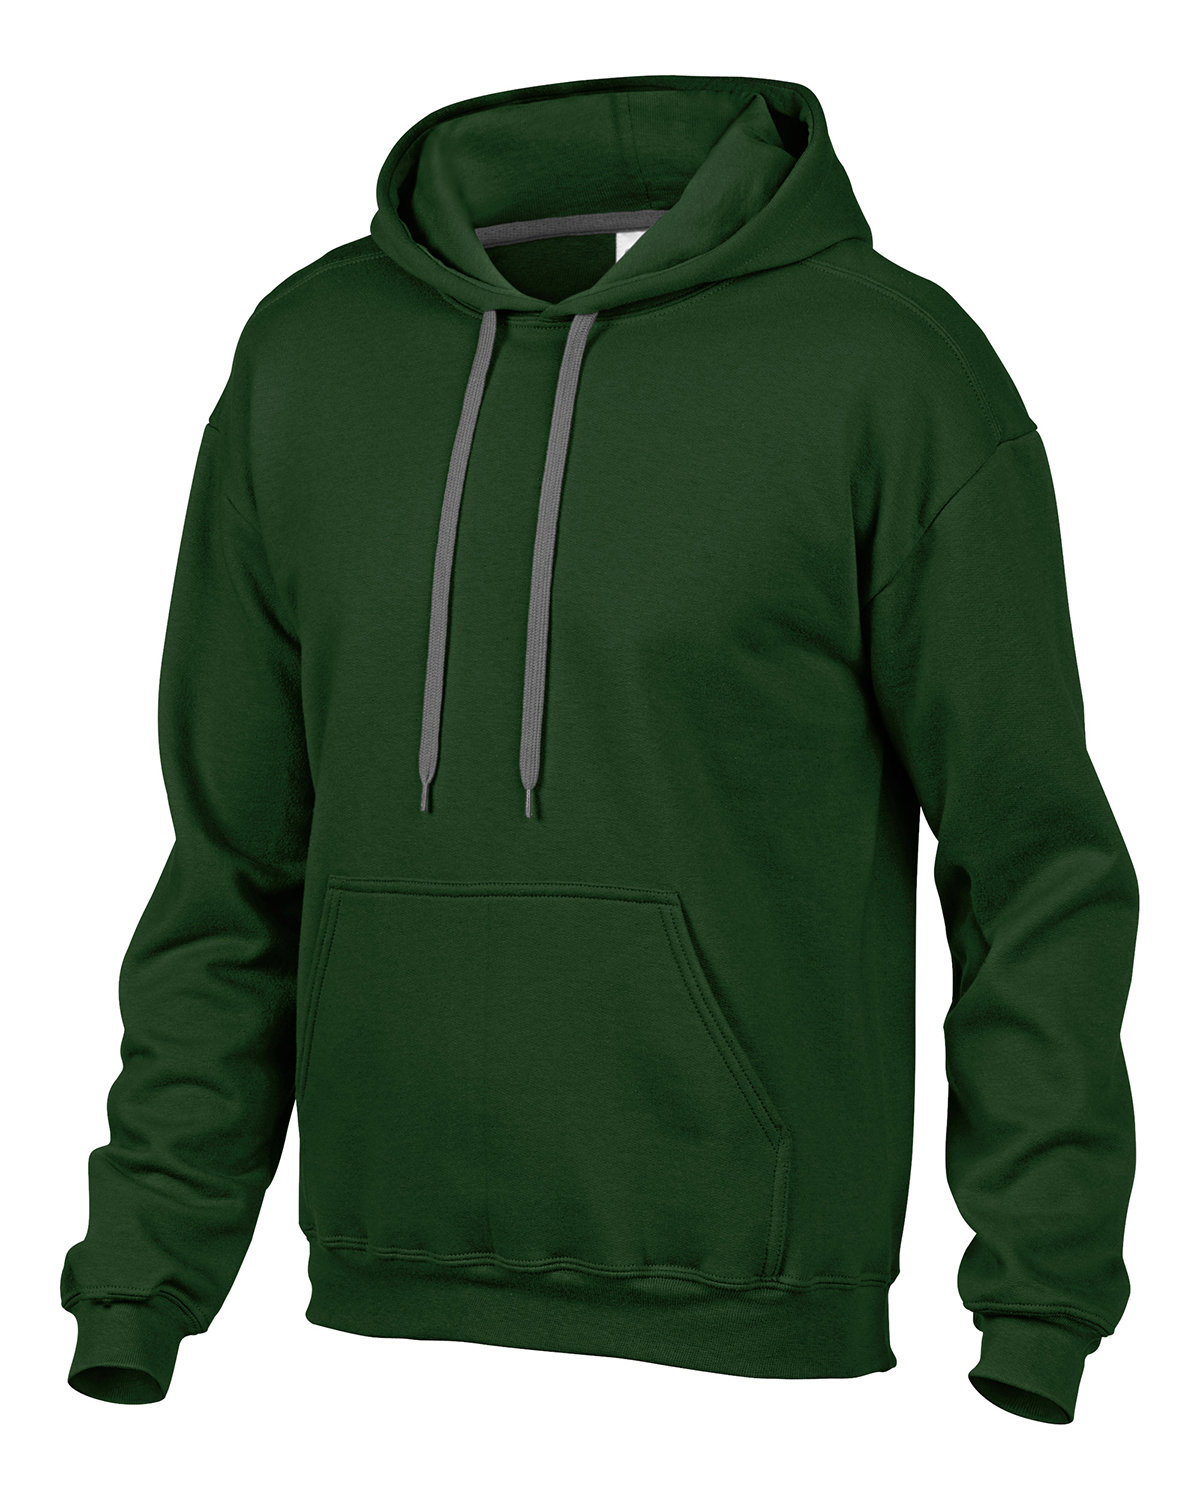 Gildan Adult Premium Cotton® Ringspun Hooded Sweatshirt | alphabroder